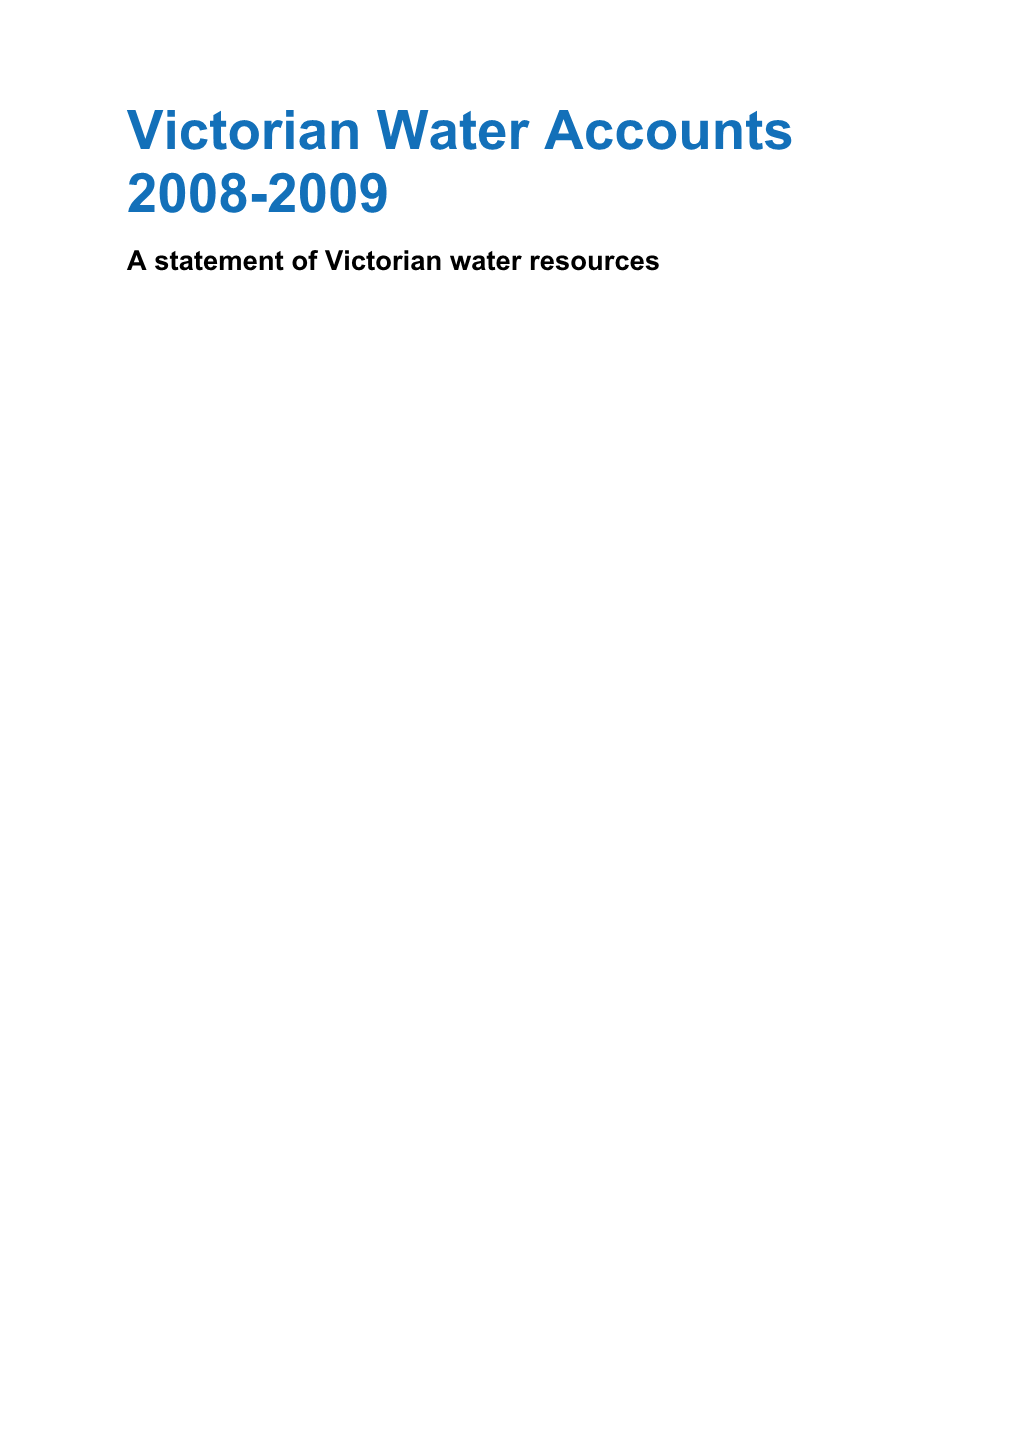 Victorian Water Accounts 2008-2009